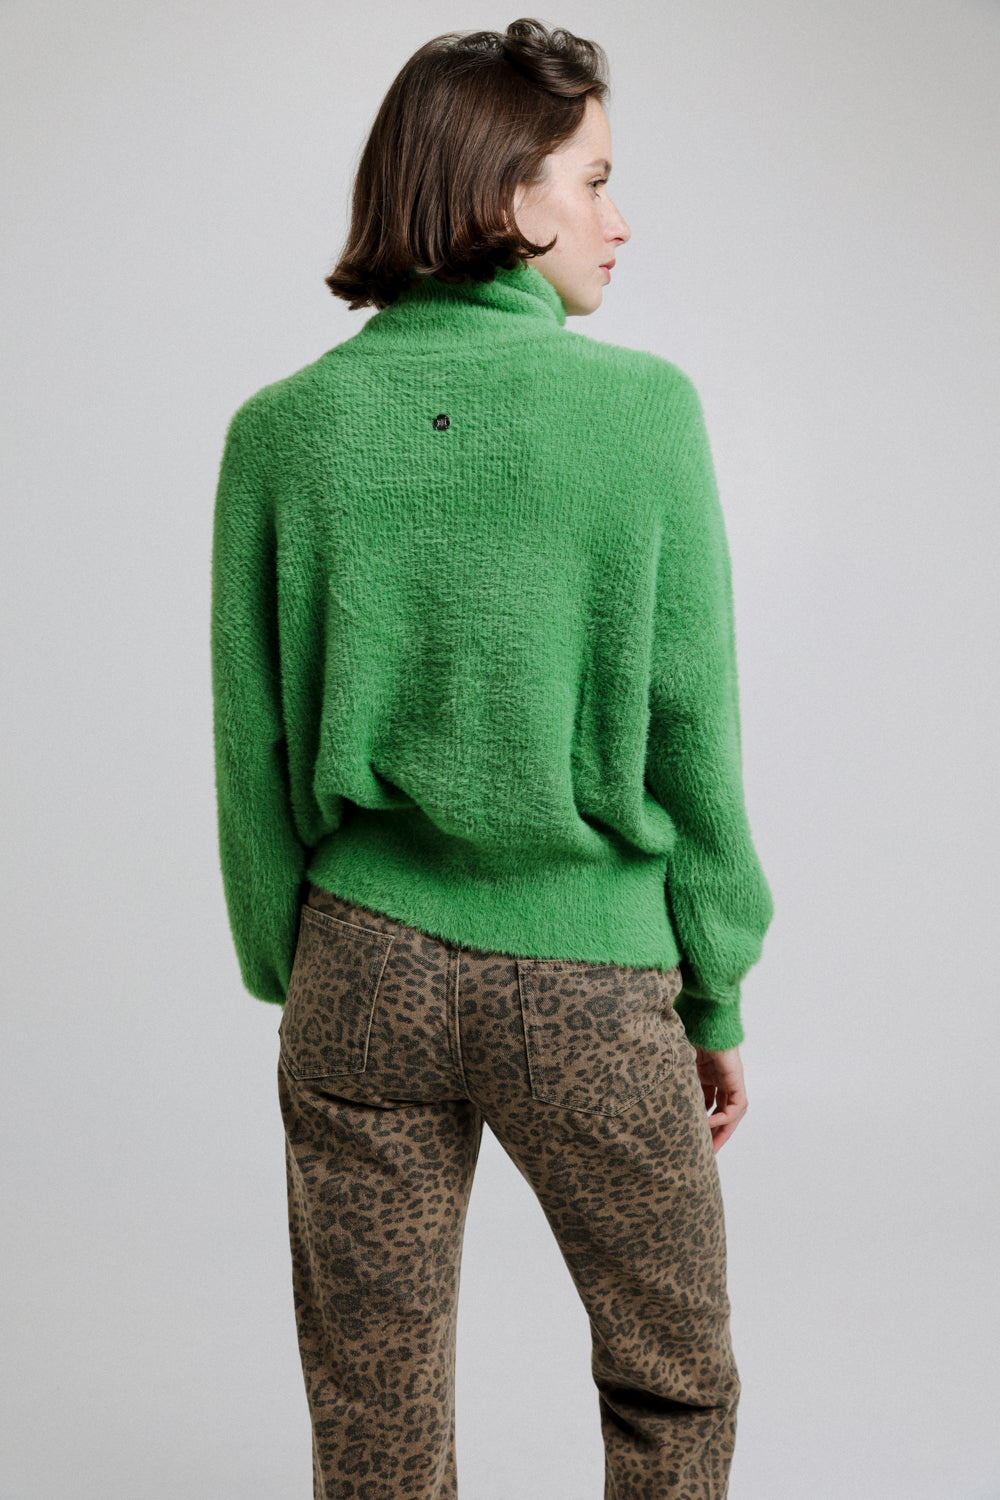 Present Green Sweater